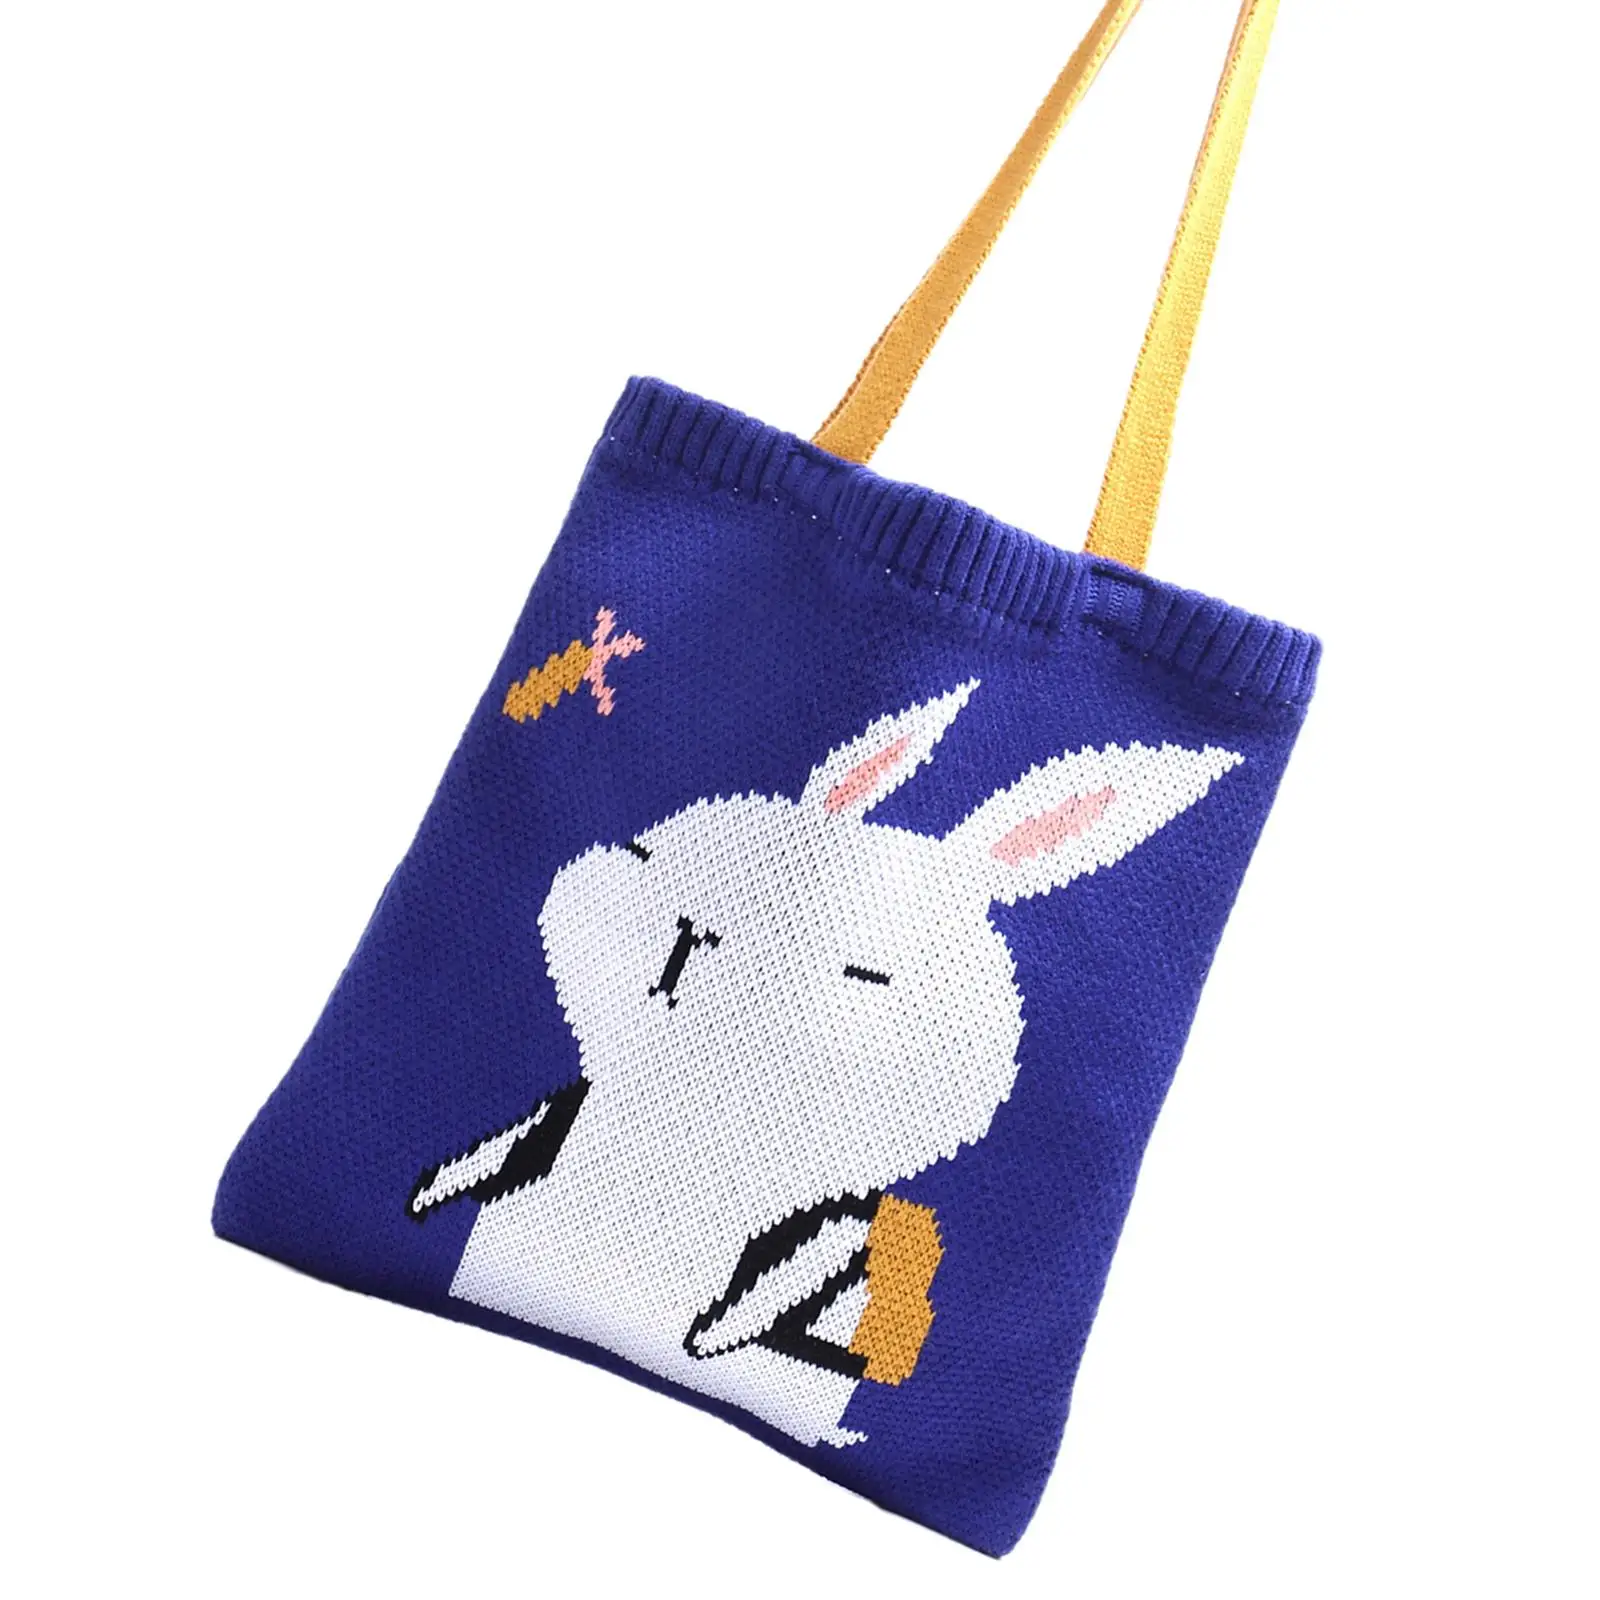 Chic Knitted Bags Handbag Rabbit Shape Sewing Crochet Casual Multipurpose Reusable Hobo Tote for Halloween Dating Girl Women